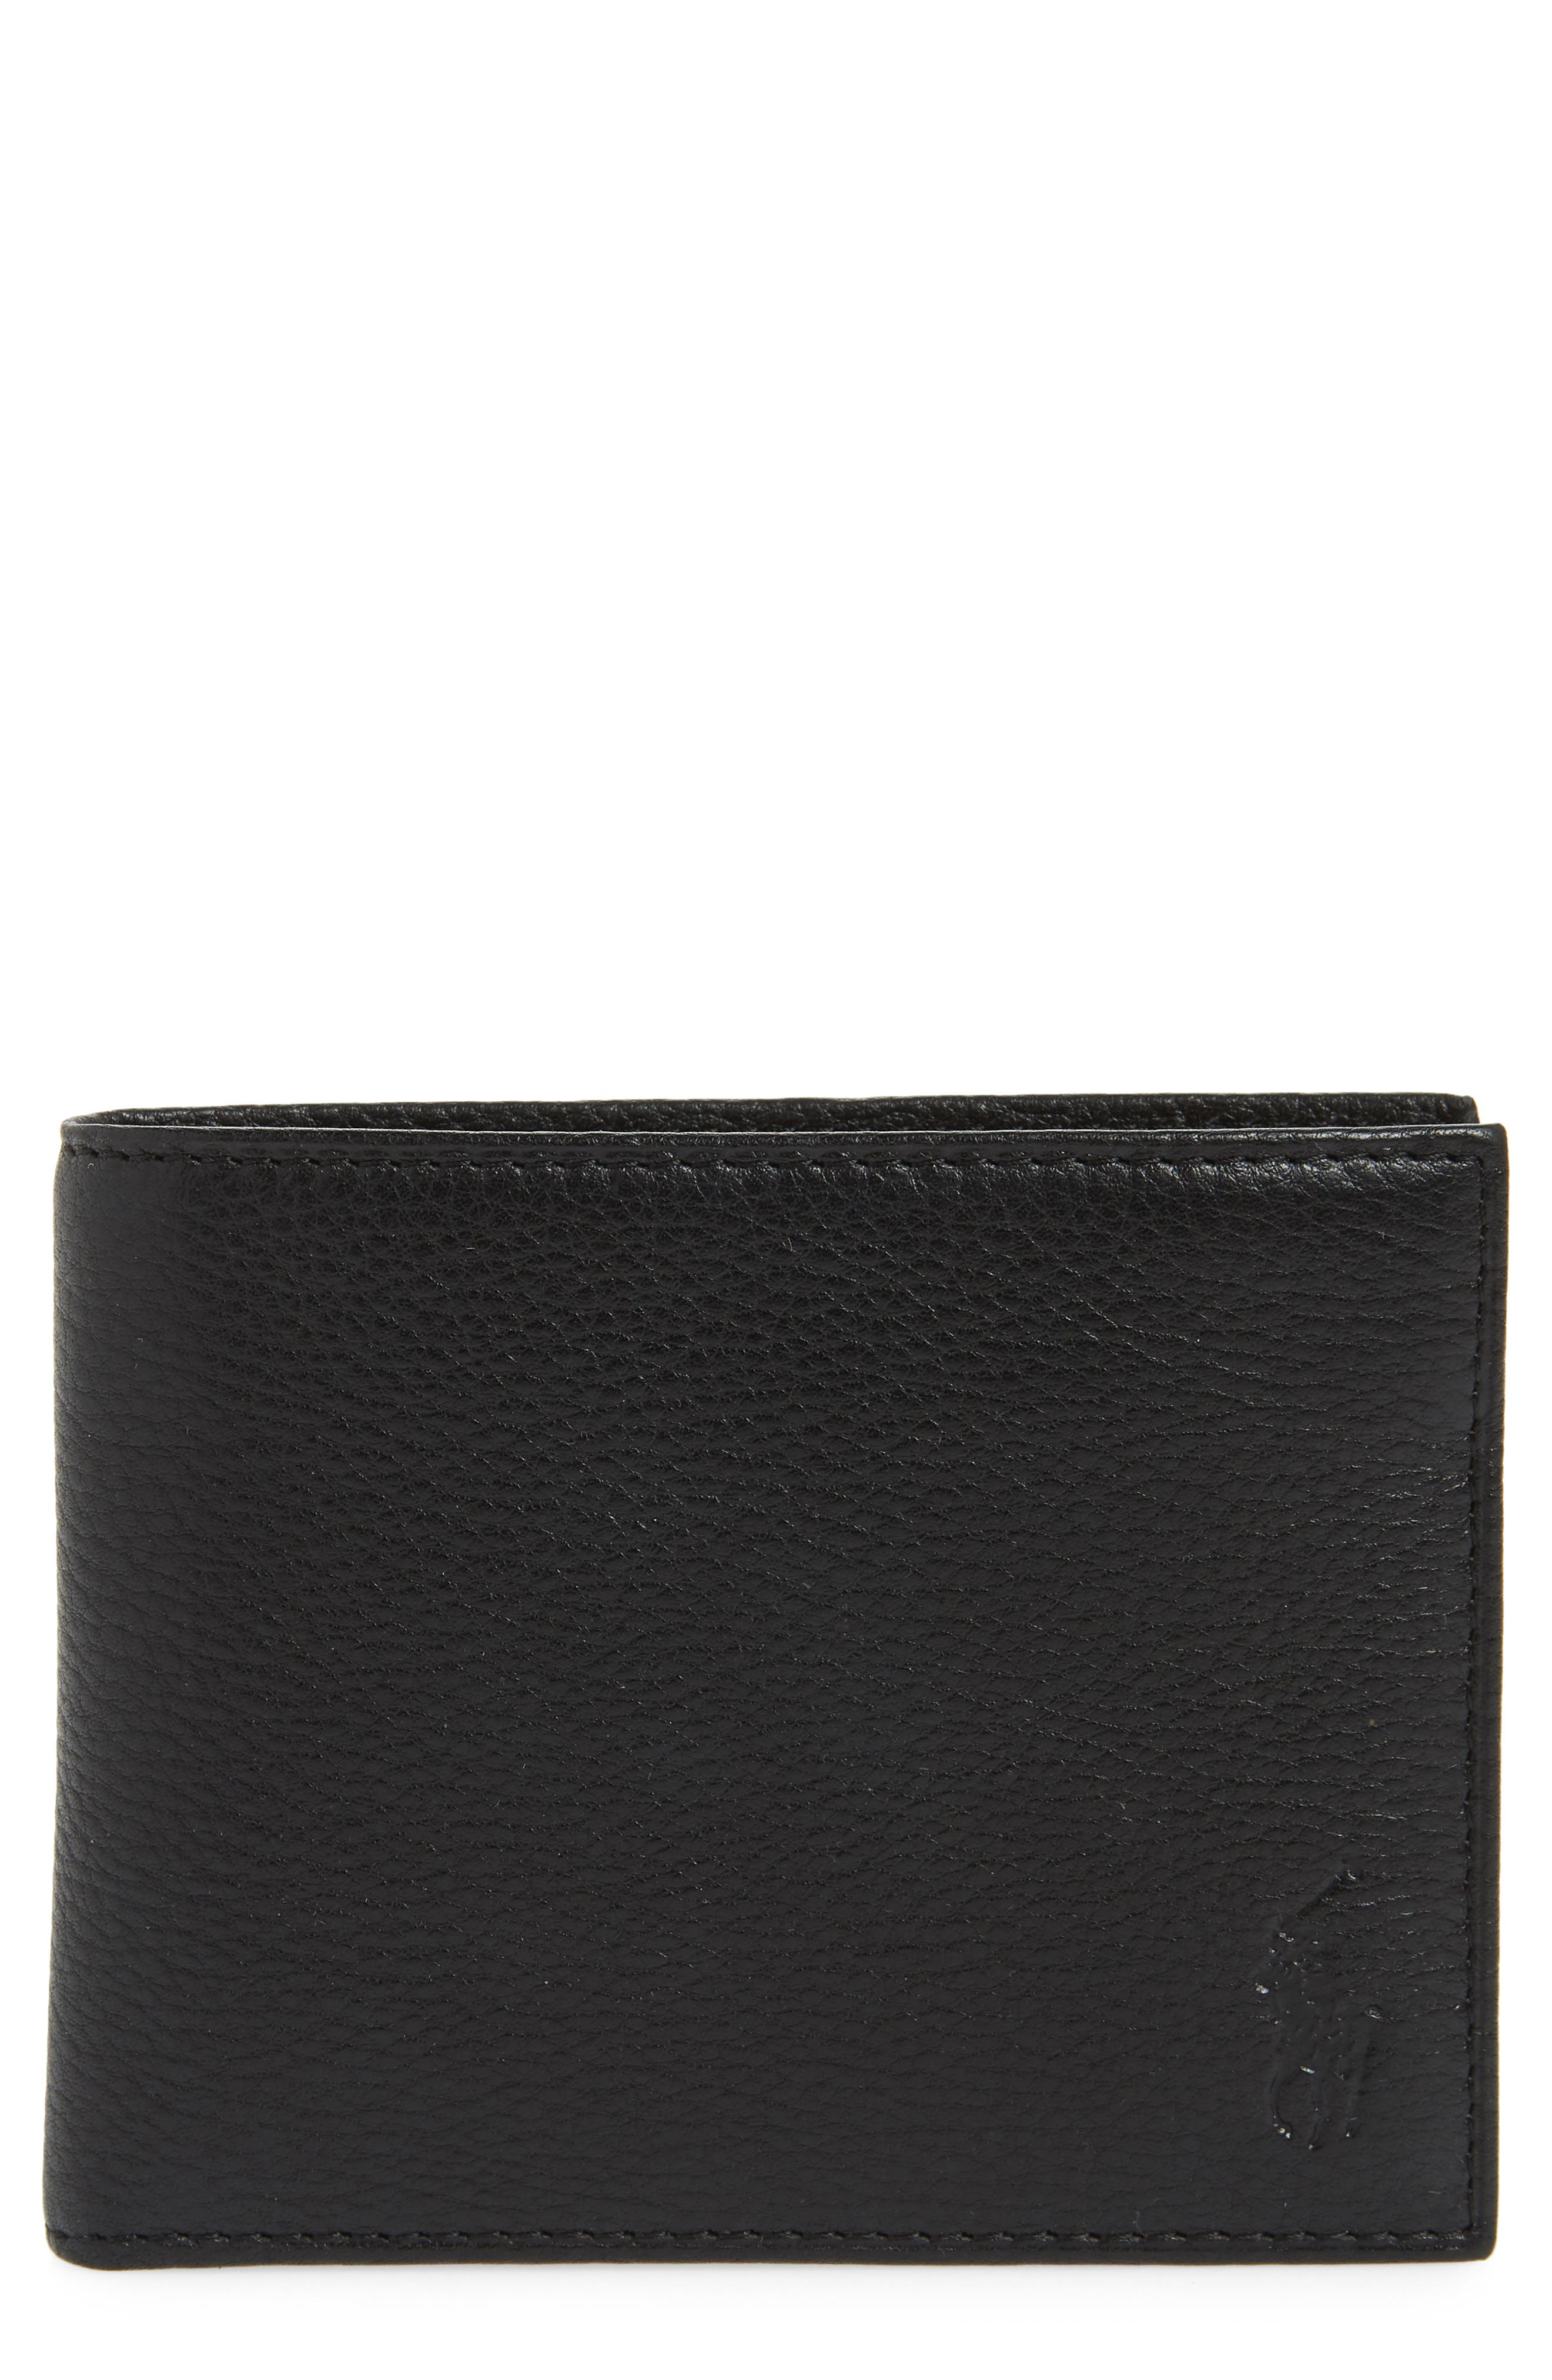 polo ralph lauren leather passcase wallet